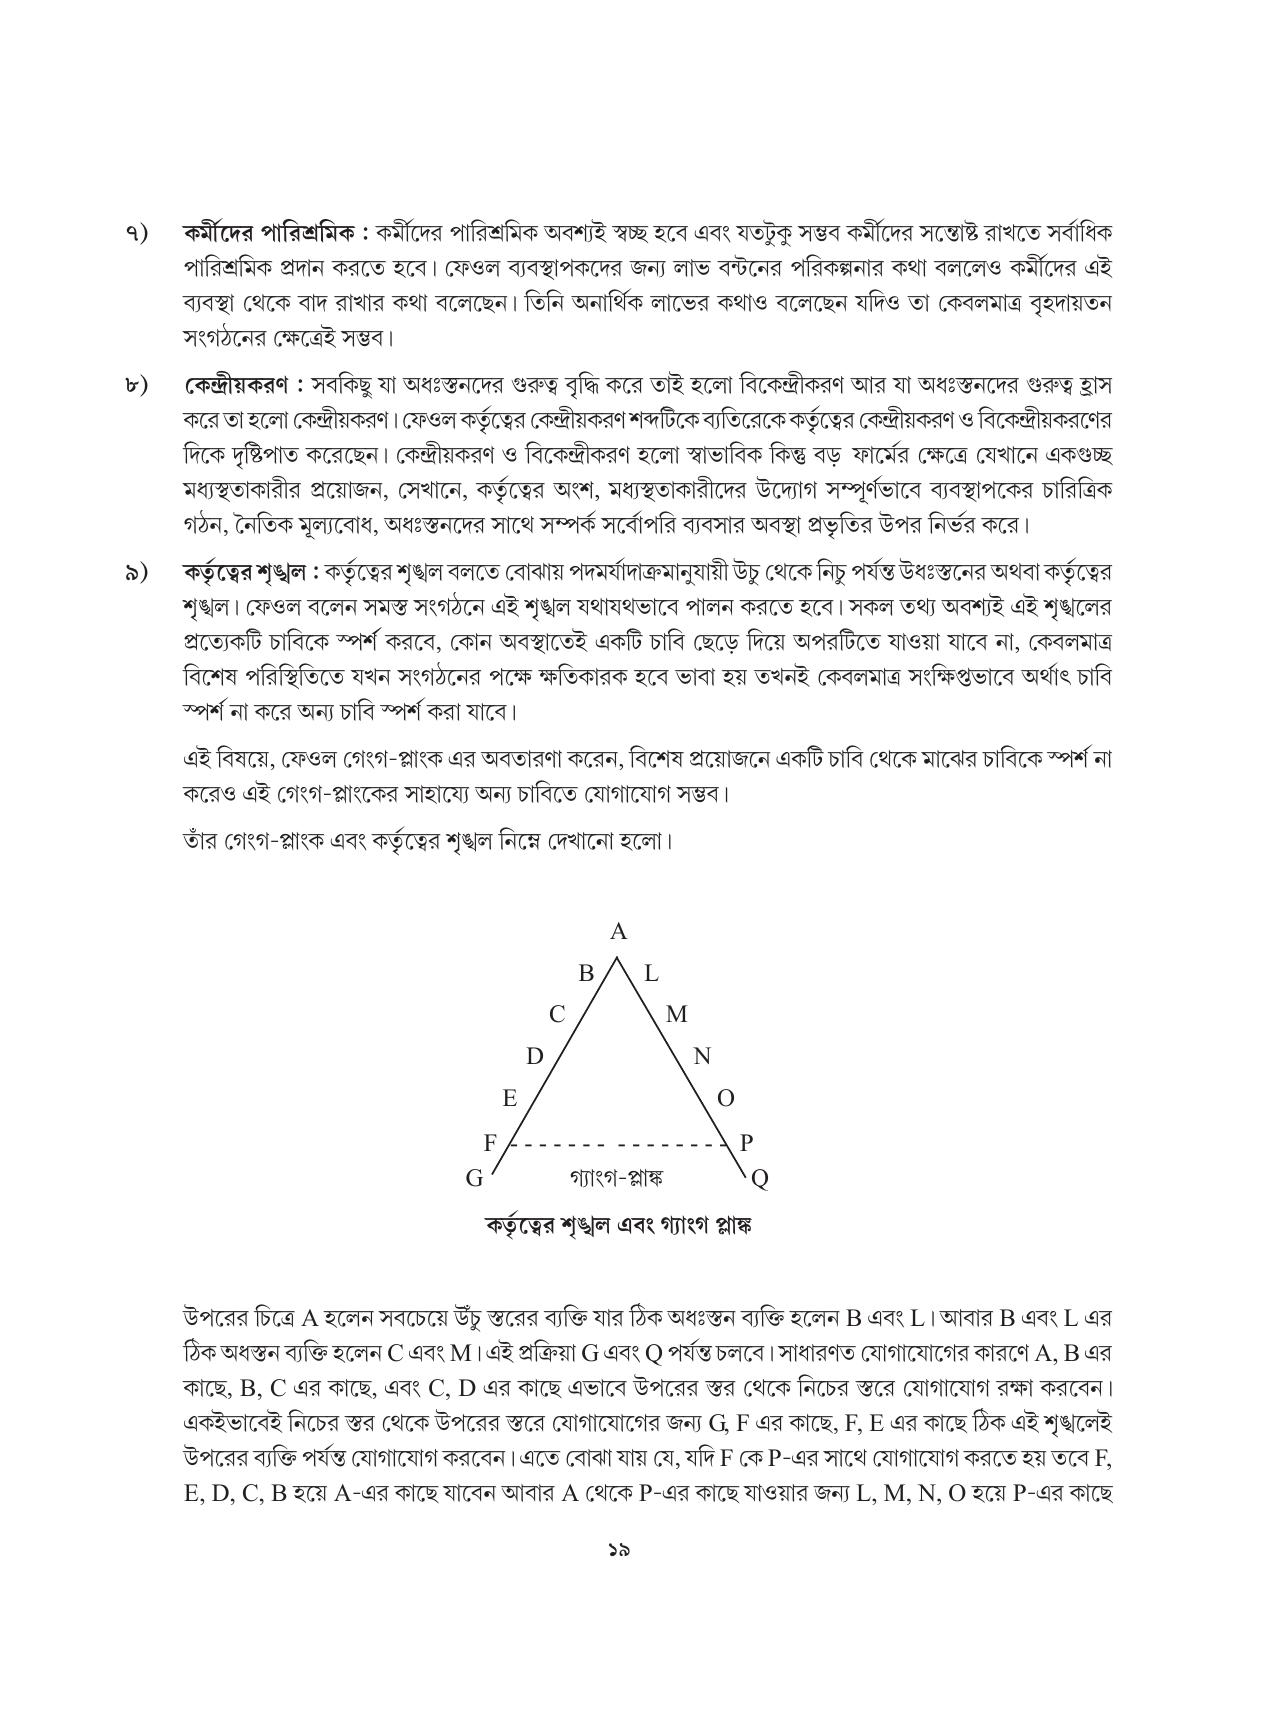 Tripura Board Class 12 Karbari Shastra Bengali Version Workbooks - Page 19